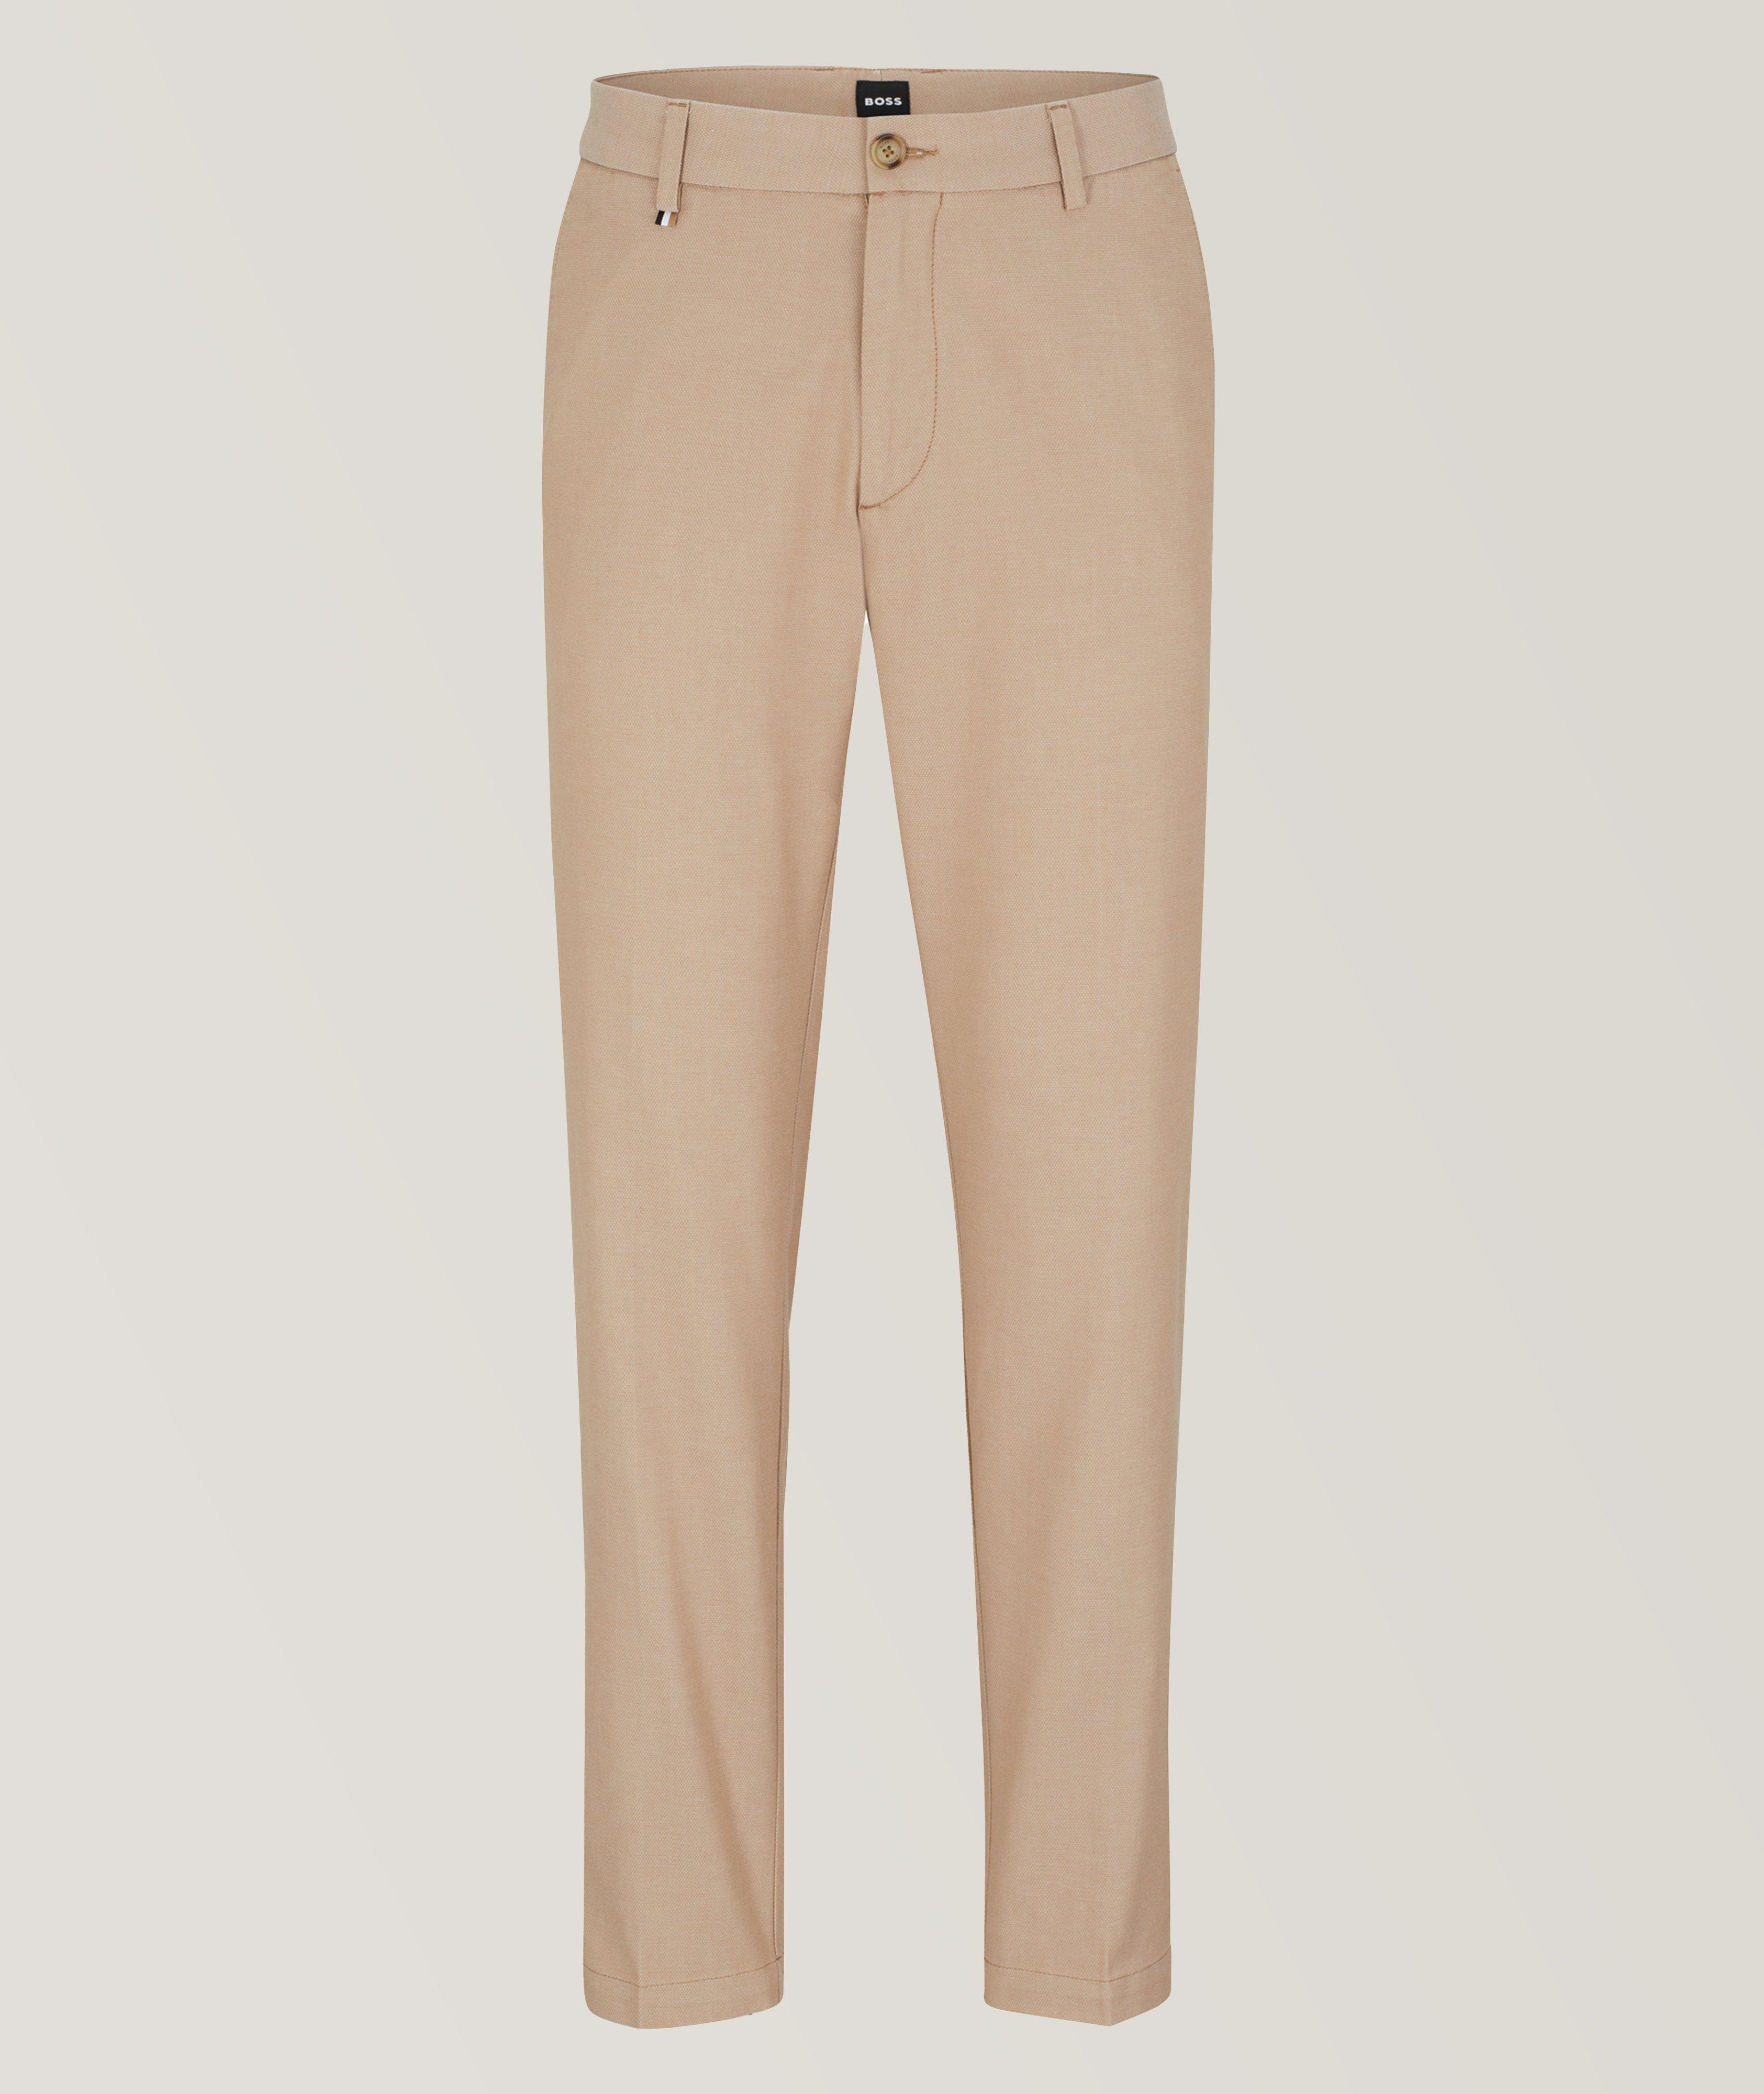 Slim-Fit Cotton-Blend Trousers image 0